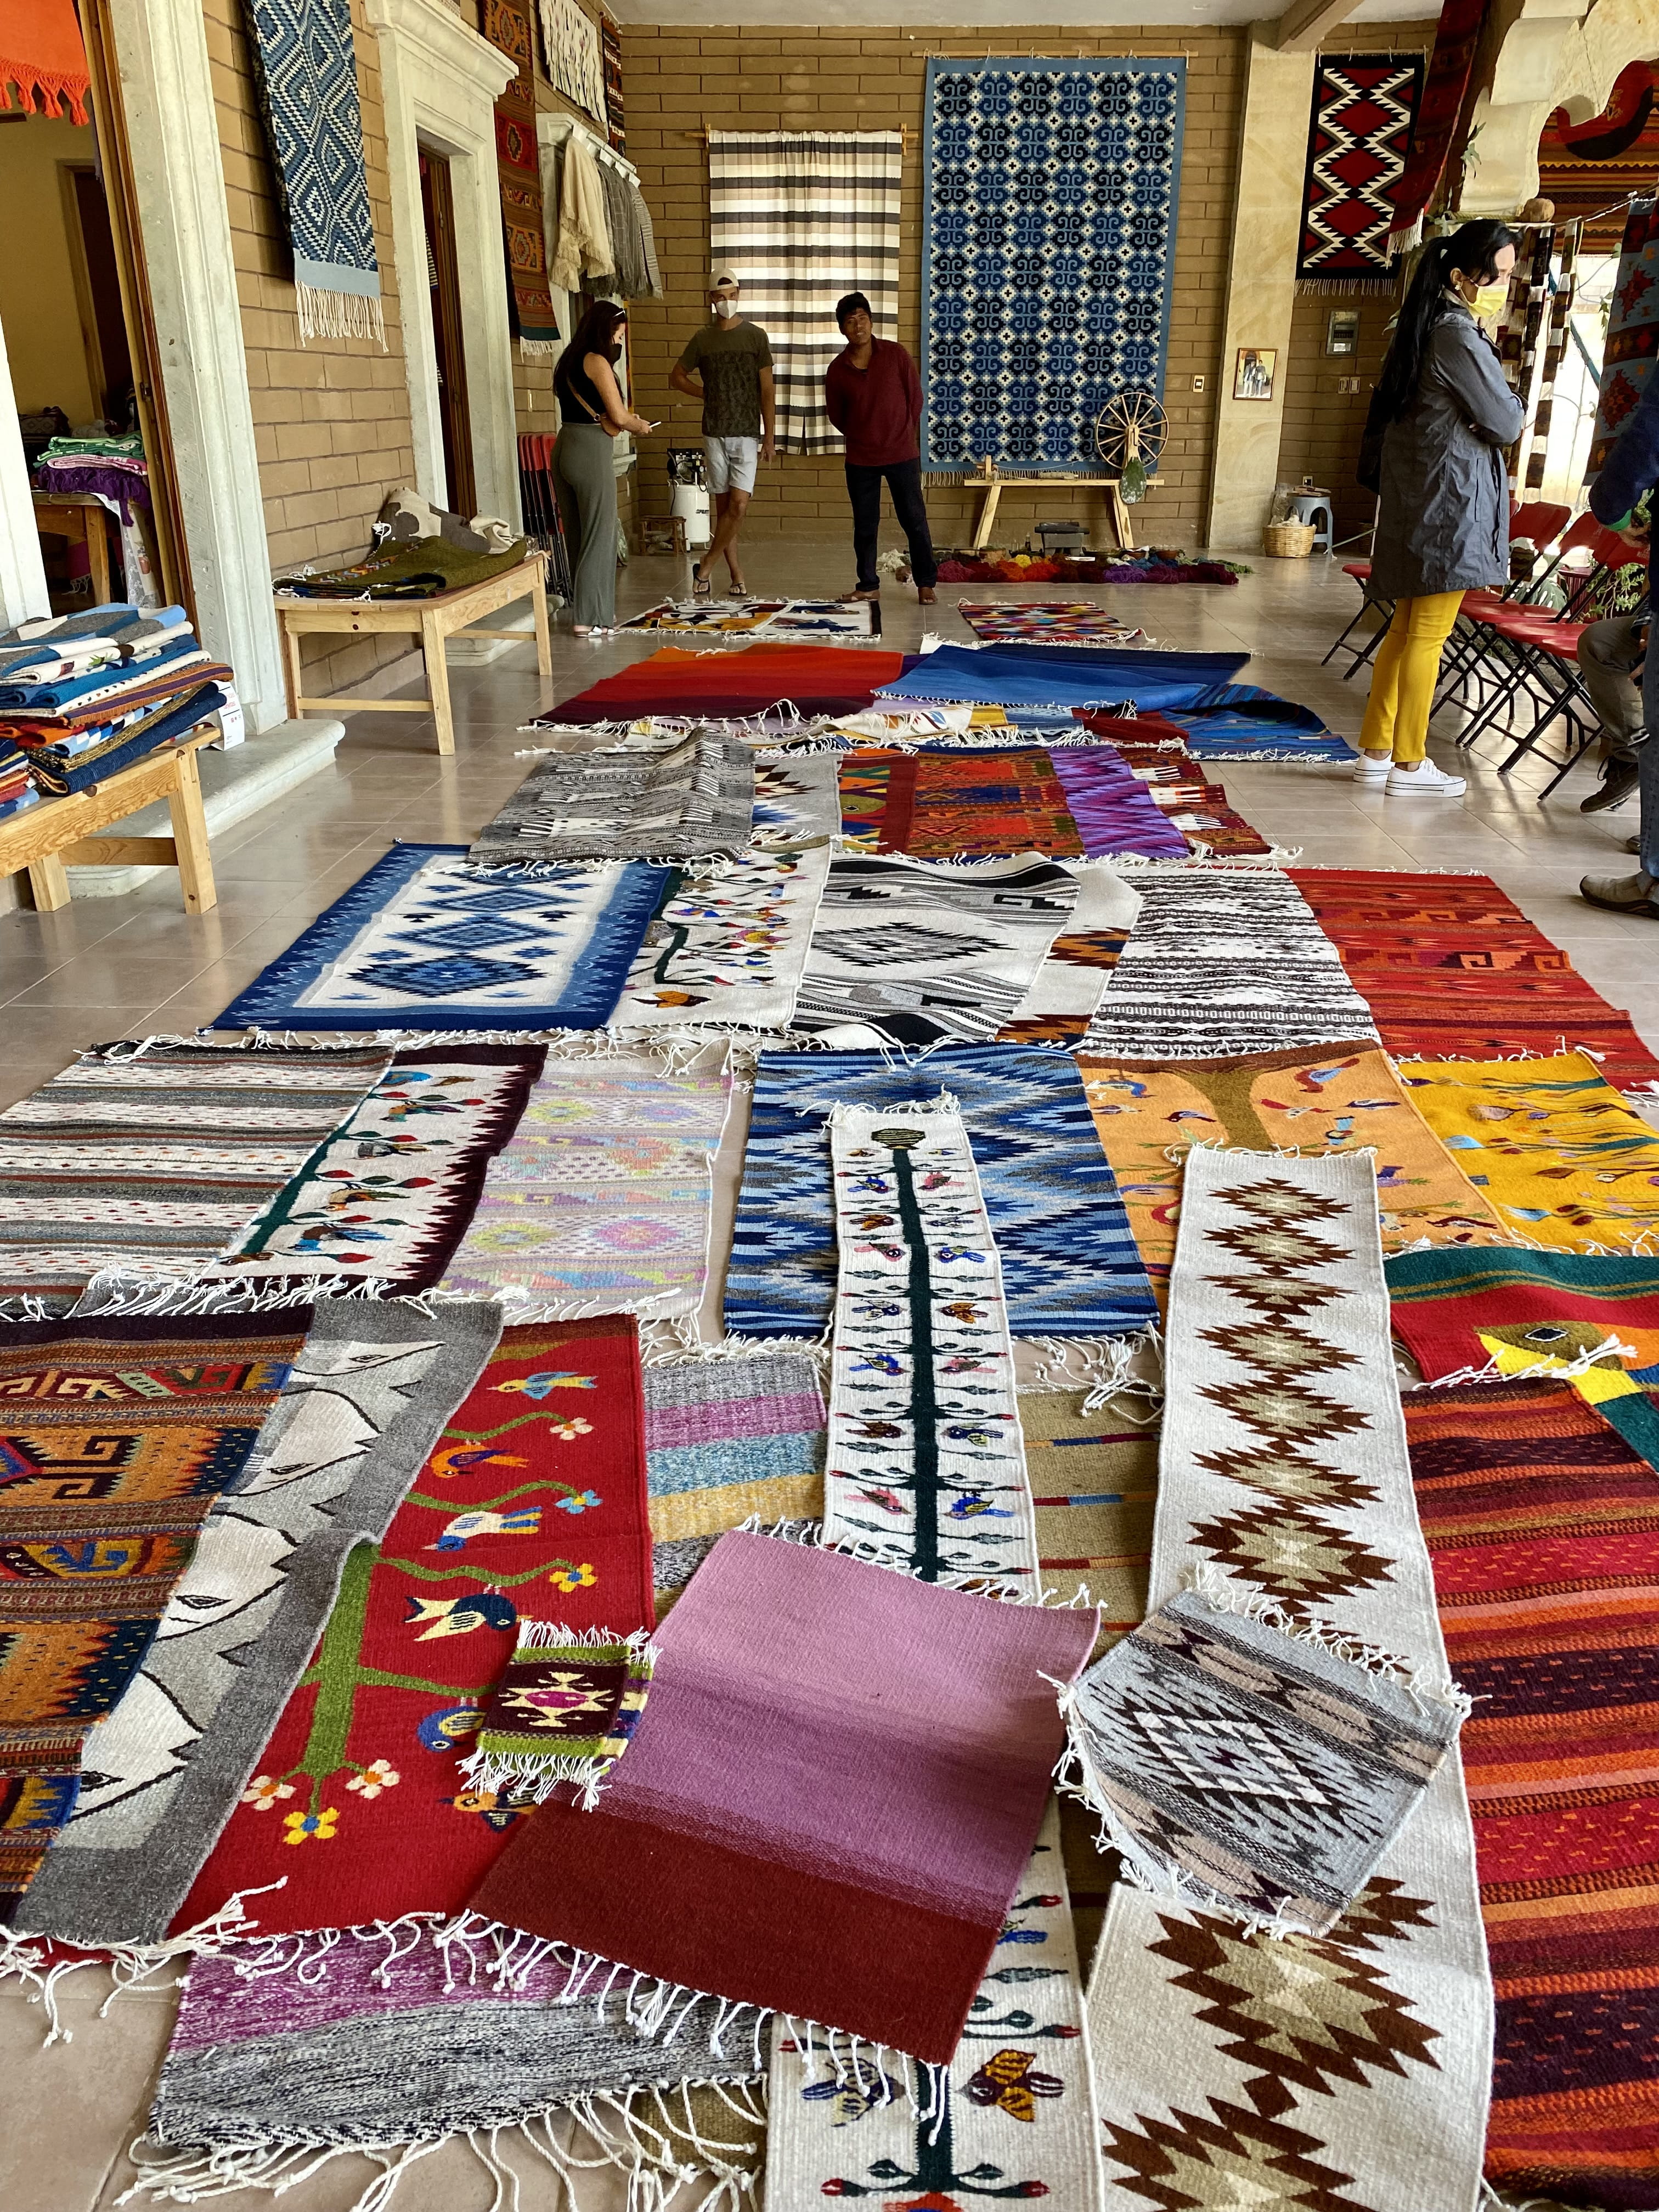 Rug vendor in Oaxaca displaying colorful rugs on floor.